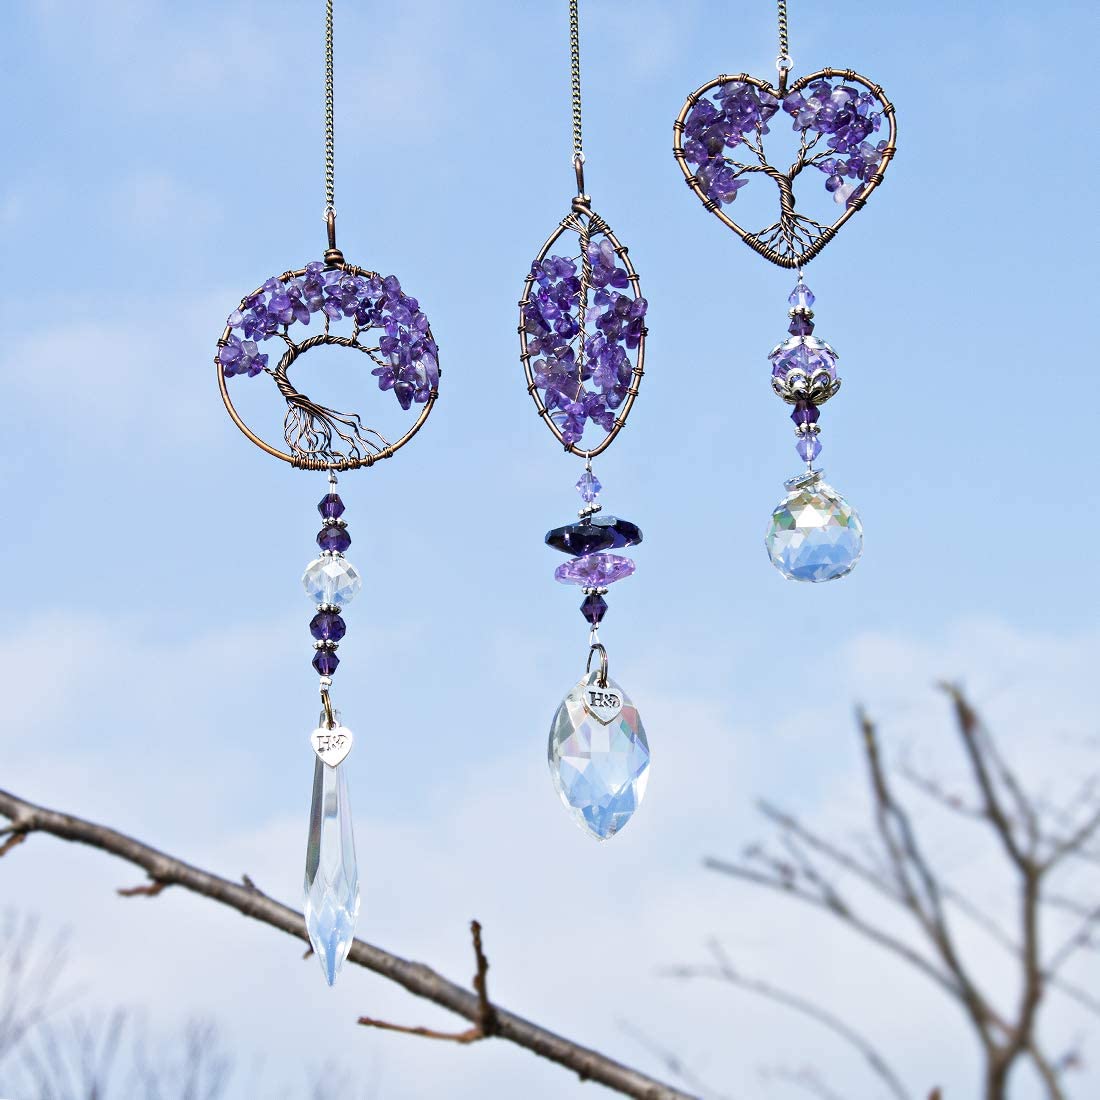 Set 3 Fantasy Purple Tree of Life Hanging Crystal Pendant Decor for Window,Car, Wedding,Party